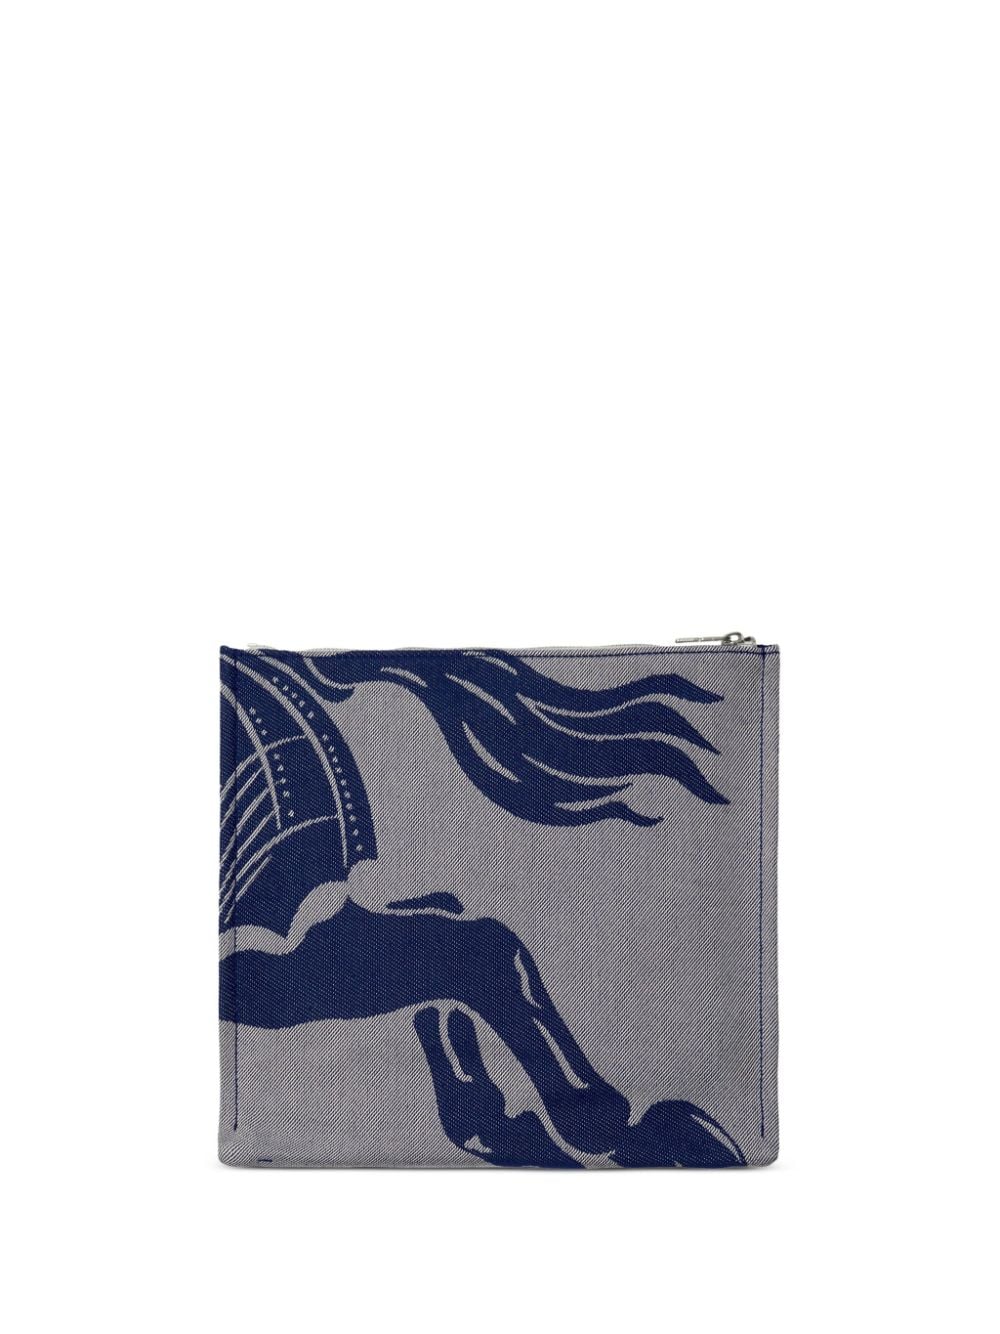 Image 2 of Burberry logo-print canvas clutch bag